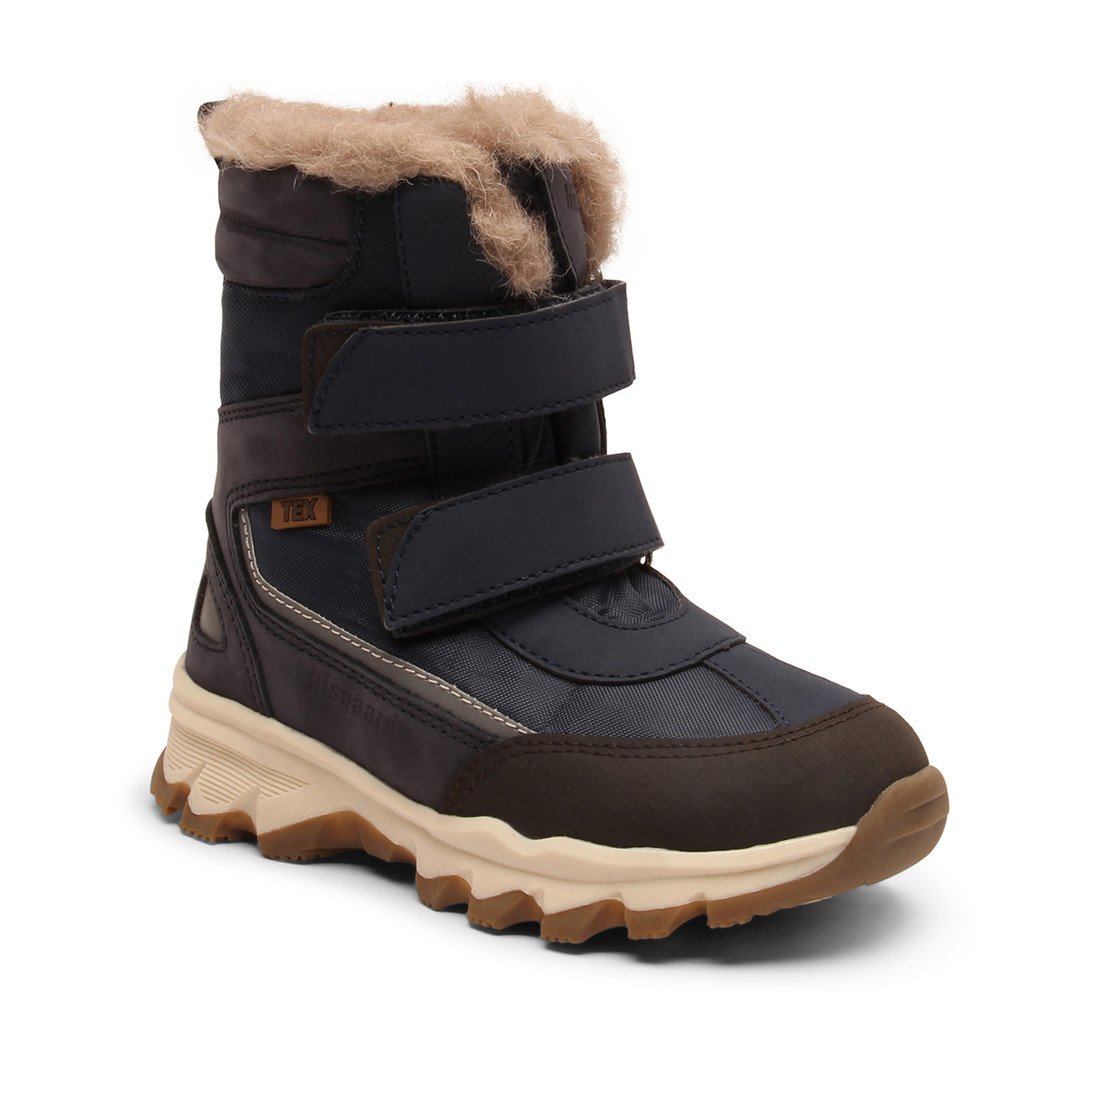 Bisgaard zimní boty 63701 - 1401 Velikost: 26